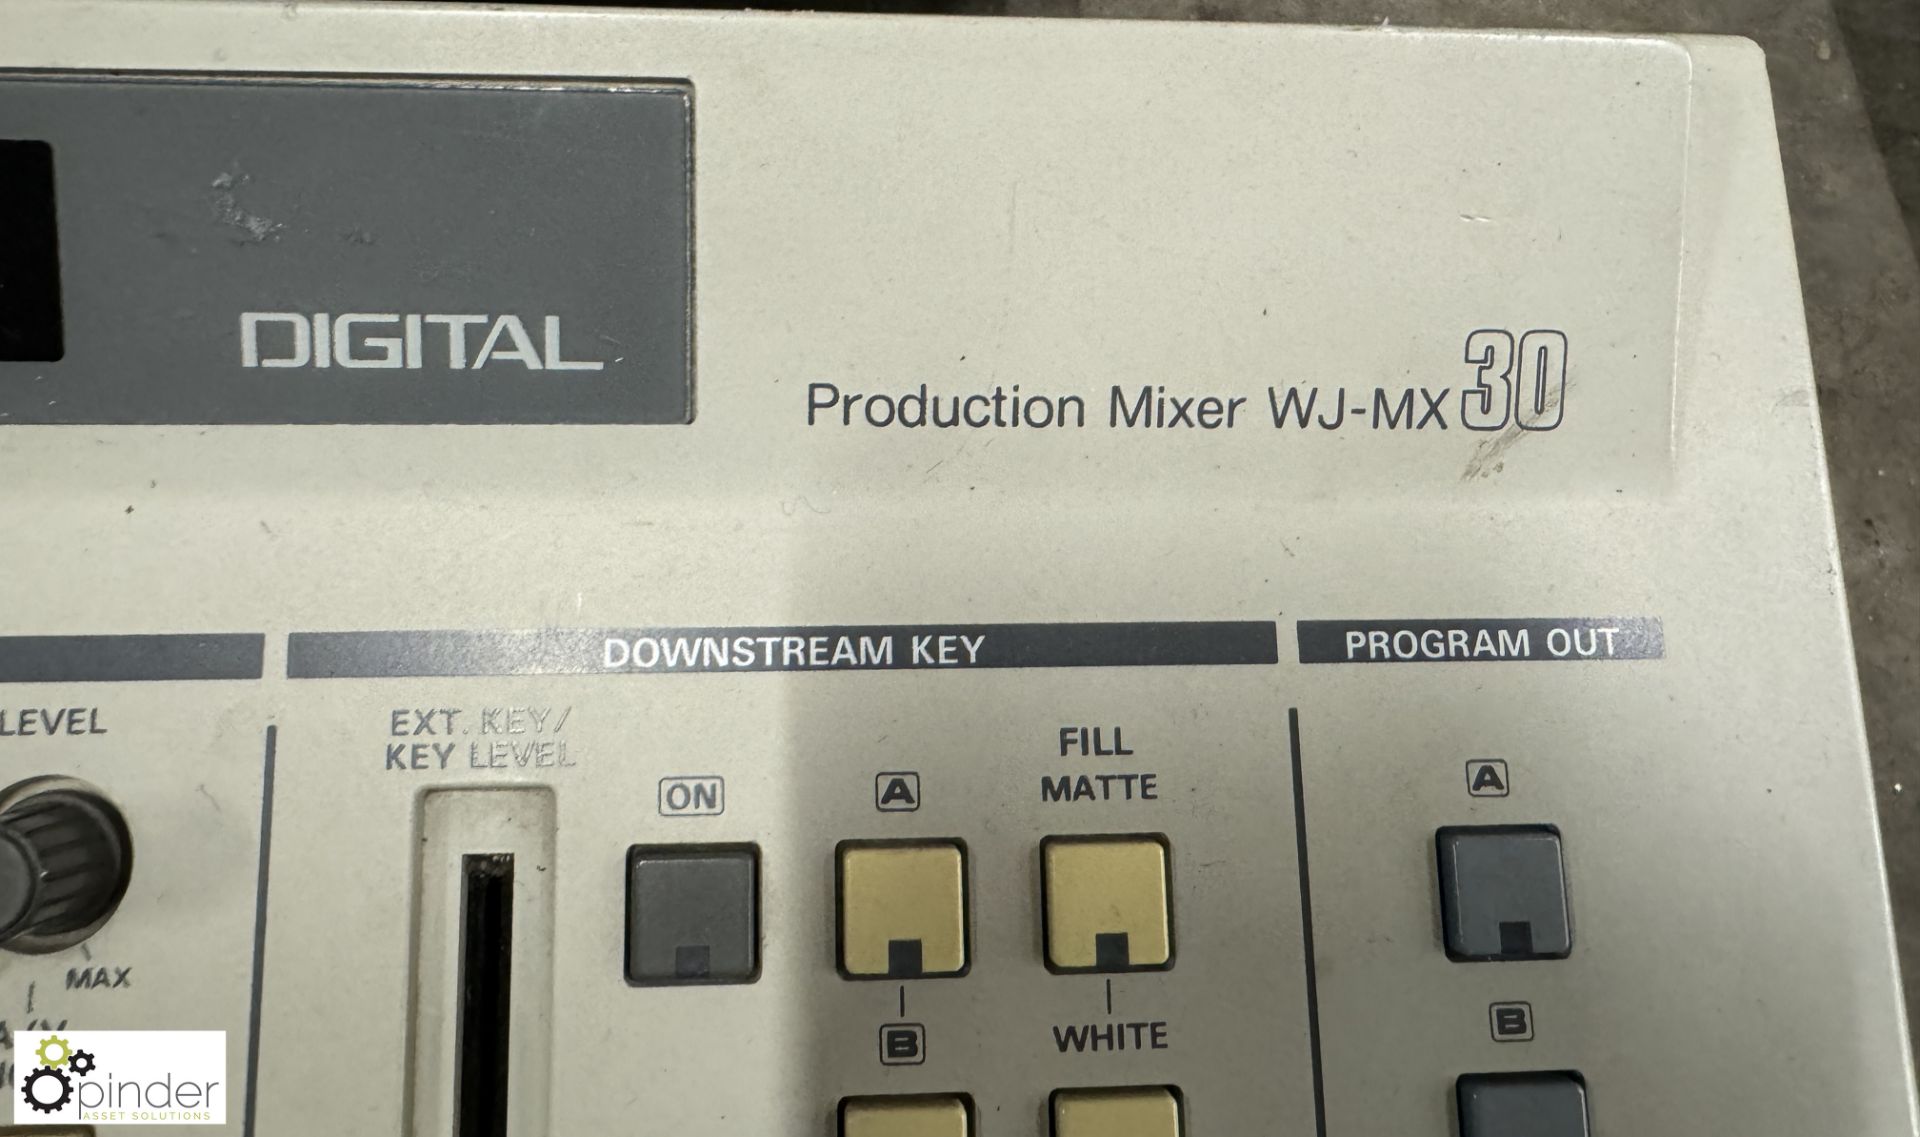 Panasonic WJ-MX30 Production Mixer - Image 2 of 4